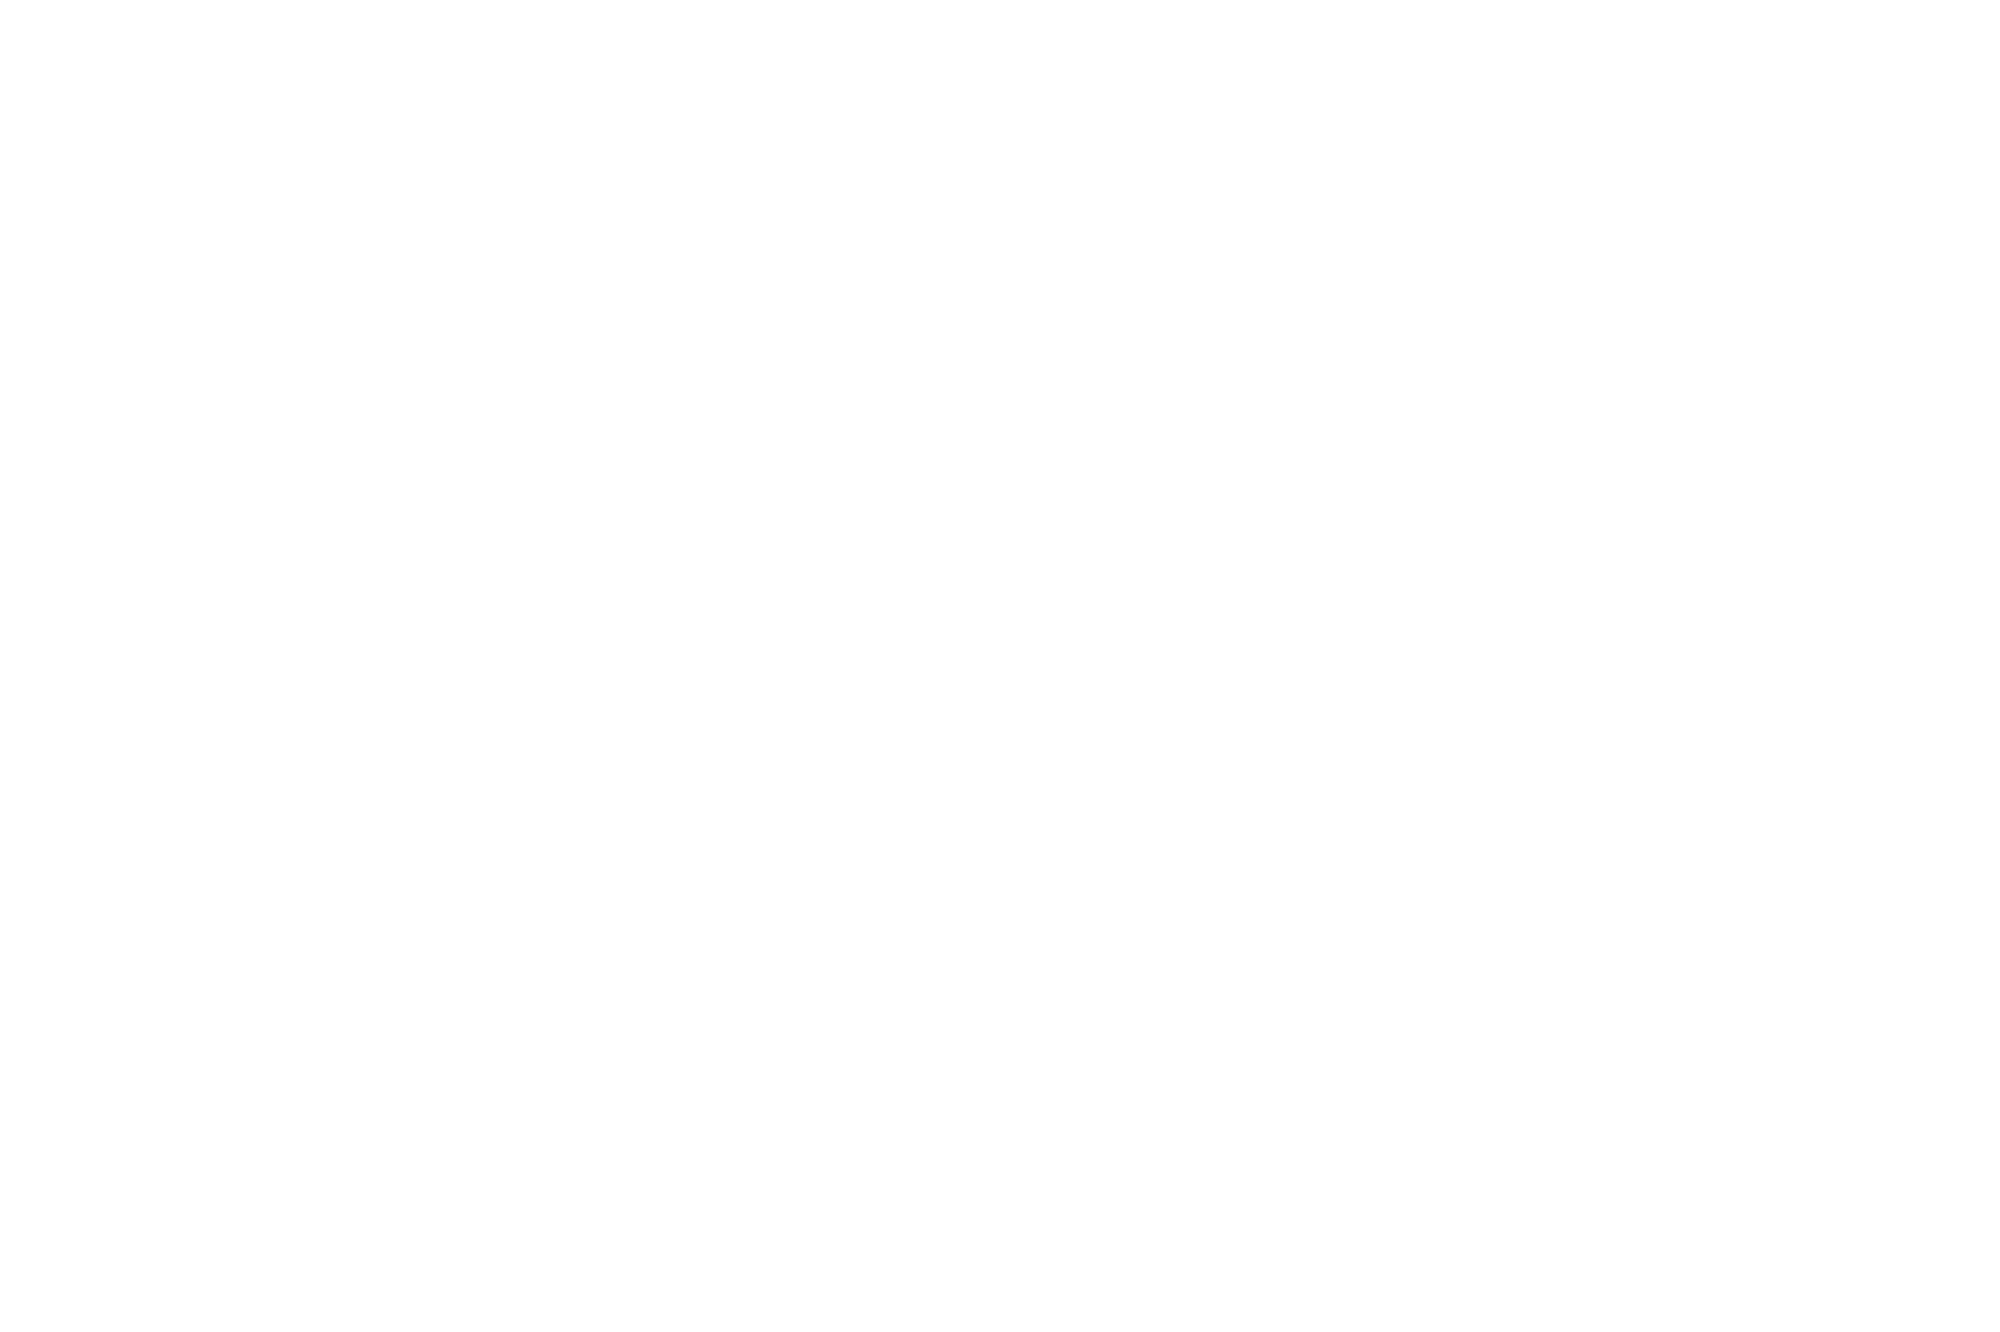 Santa's Coming to Dimond Center